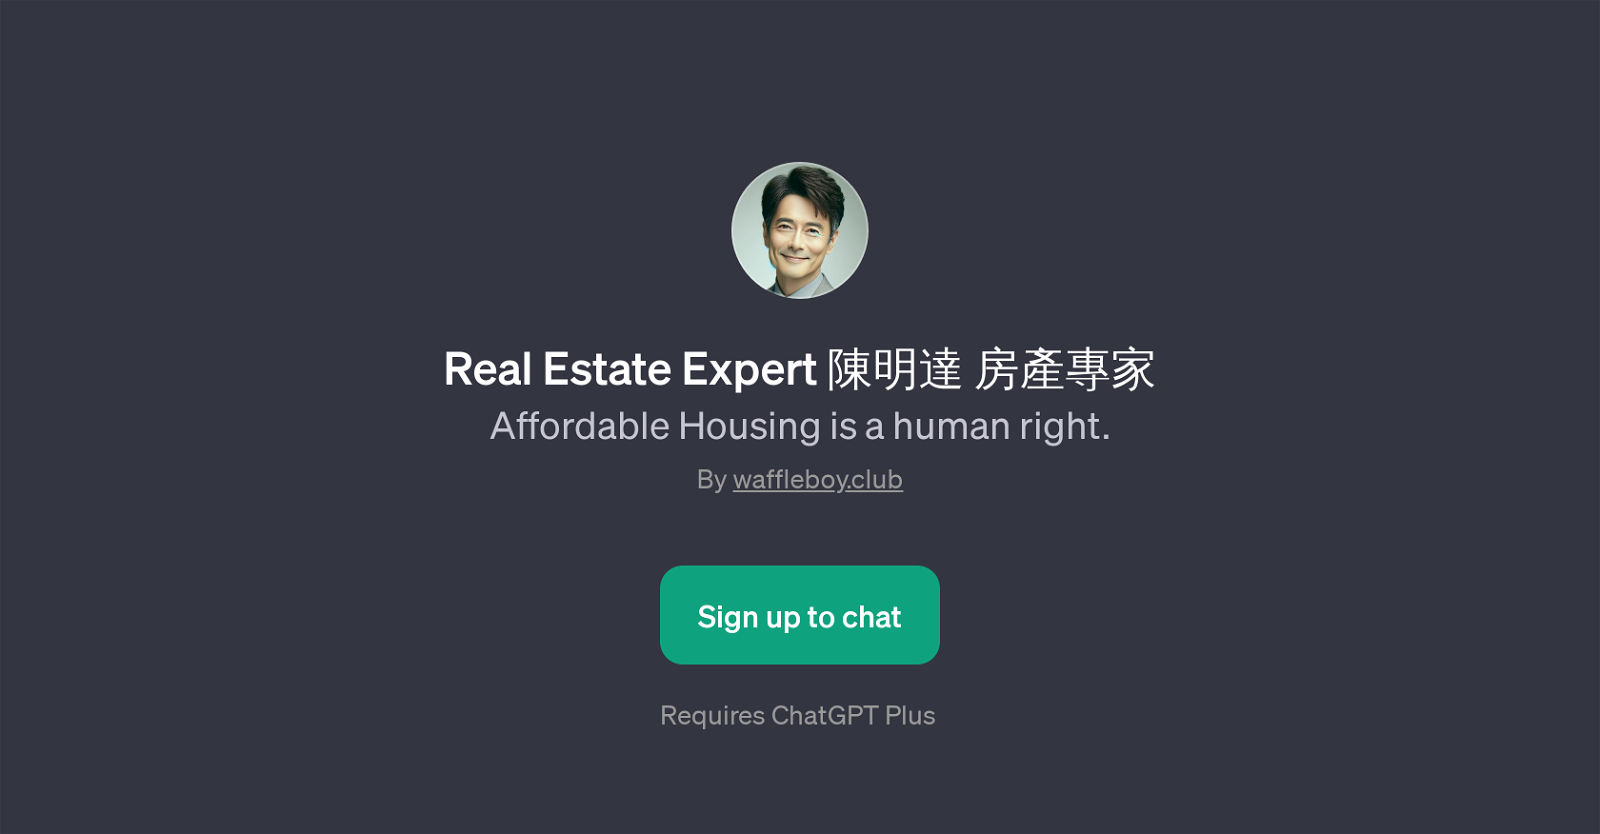 Real Estate Expert Chen Mingda website